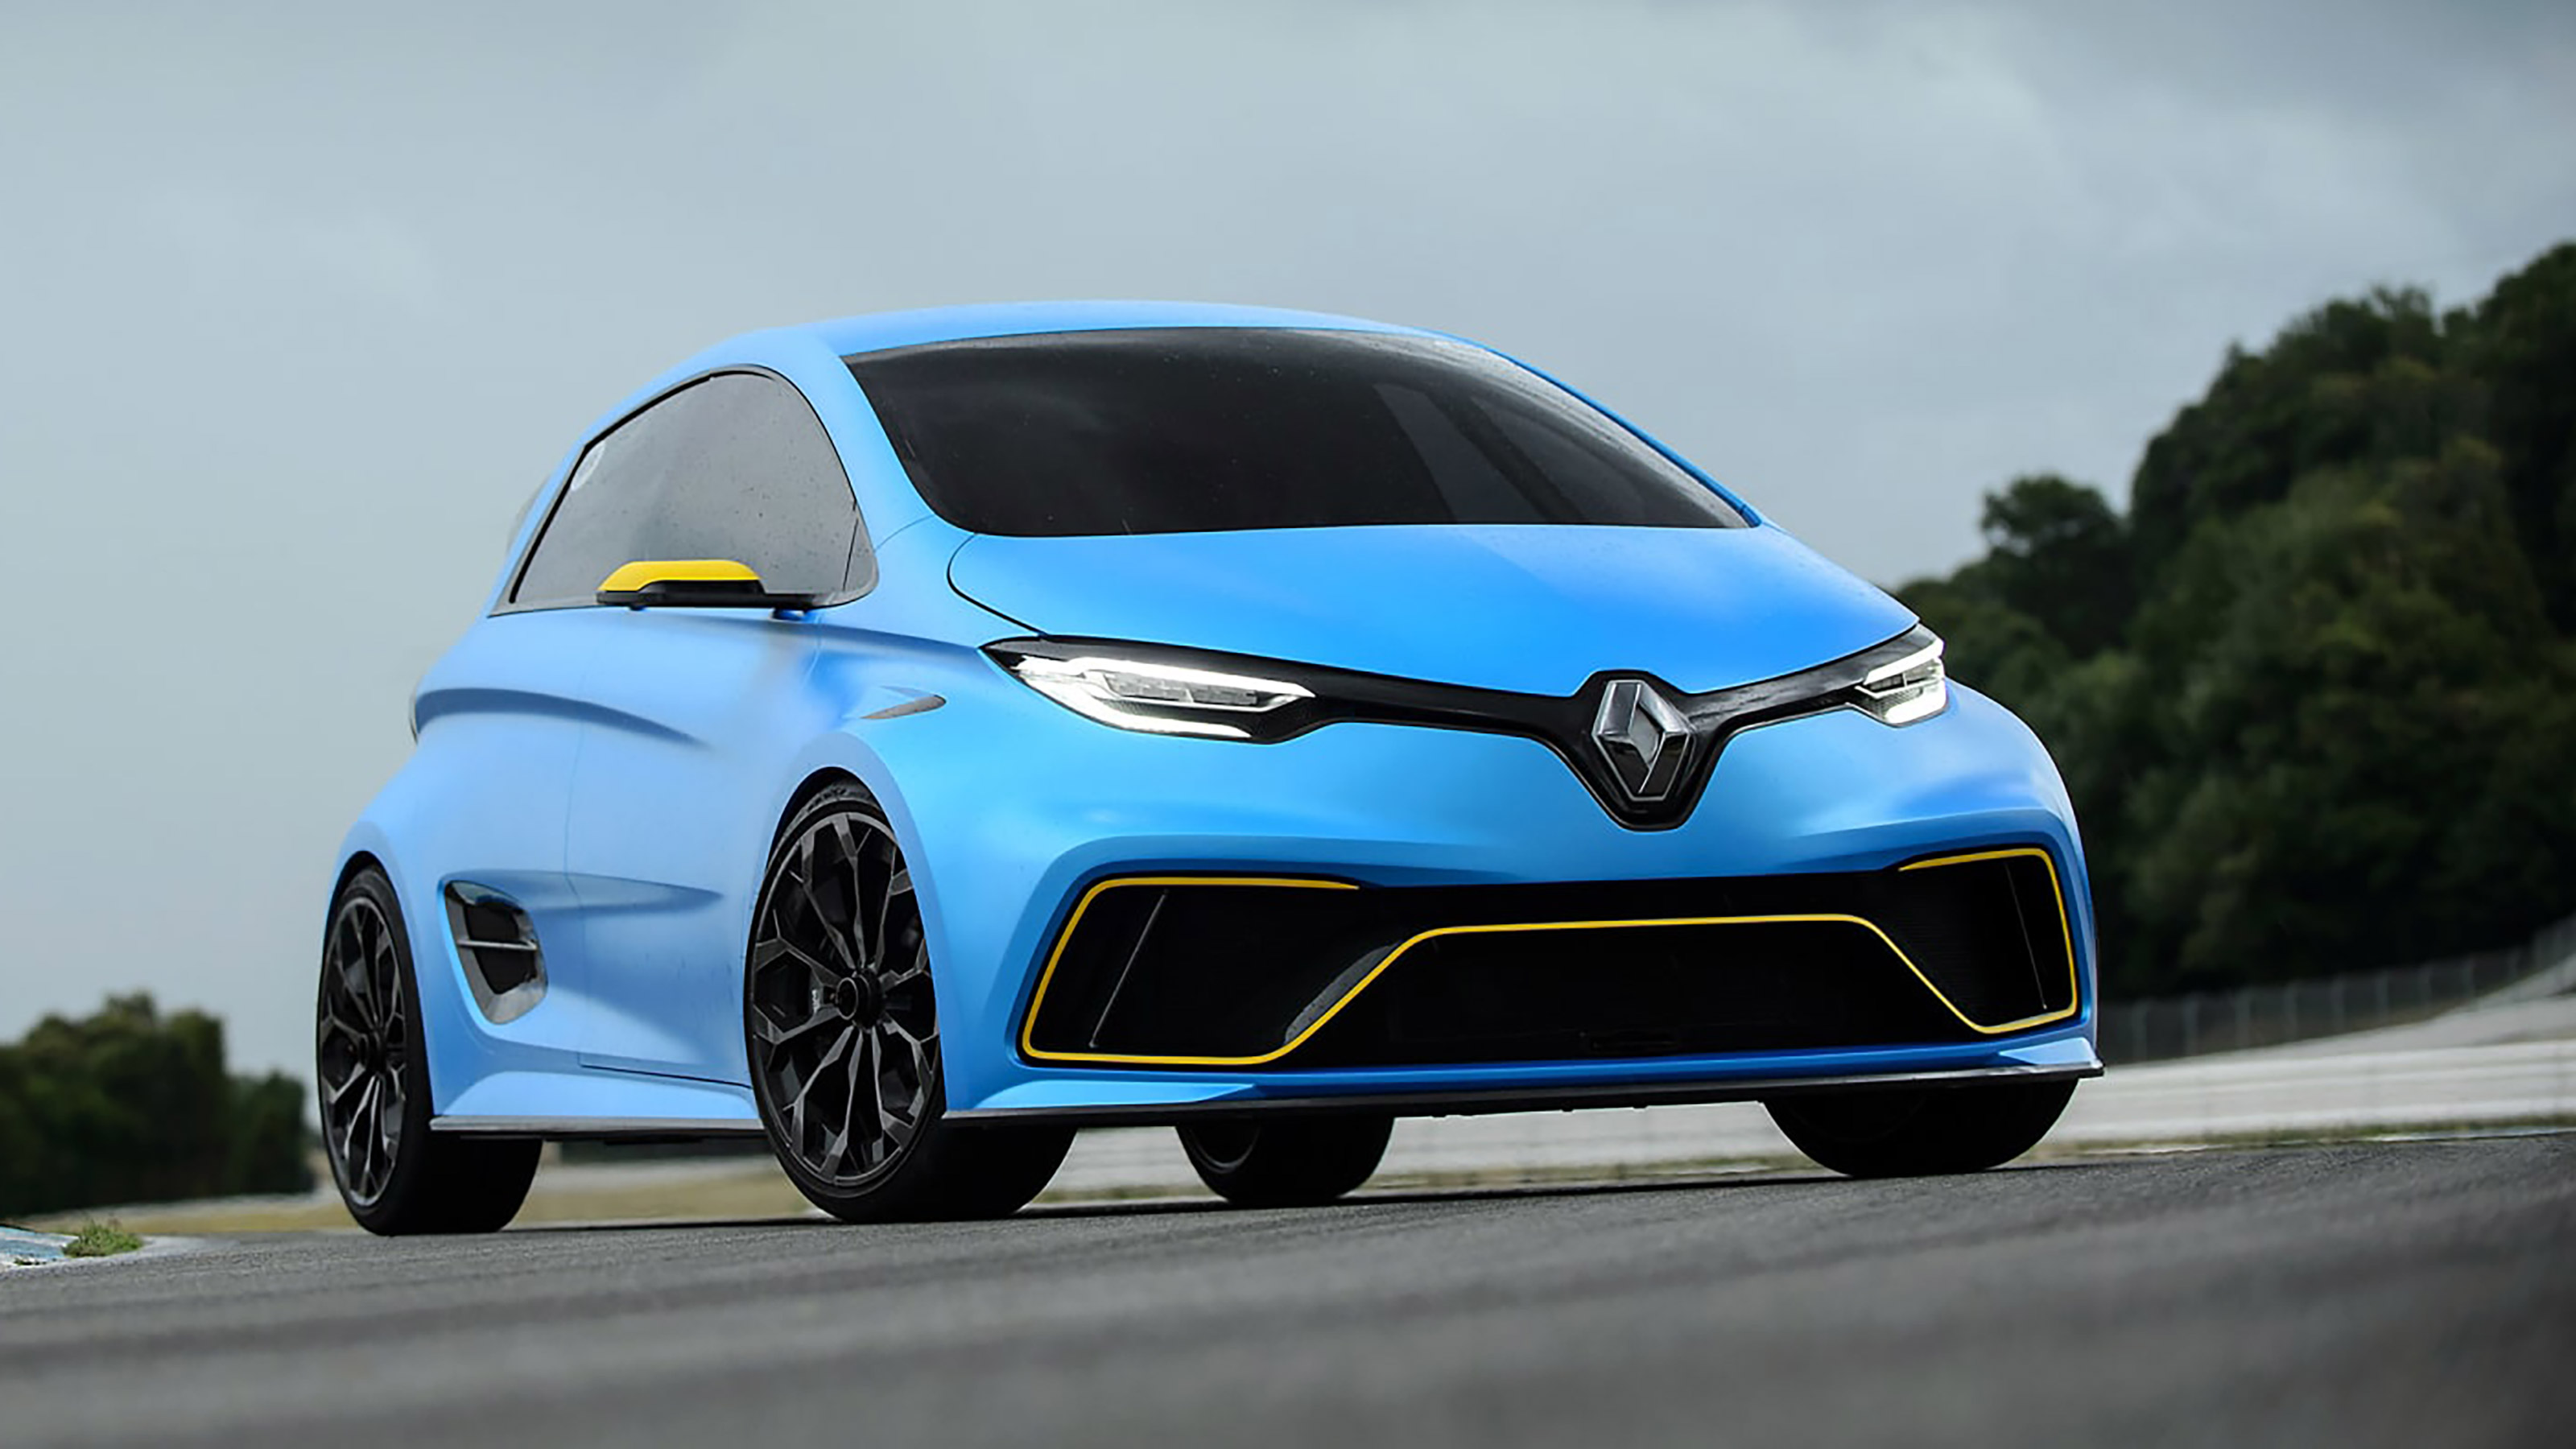 https://media.evo.co.uk/image/upload/v1570794439/evo/2019/10/Renault%20Zoe%20RS%20-4.jpg